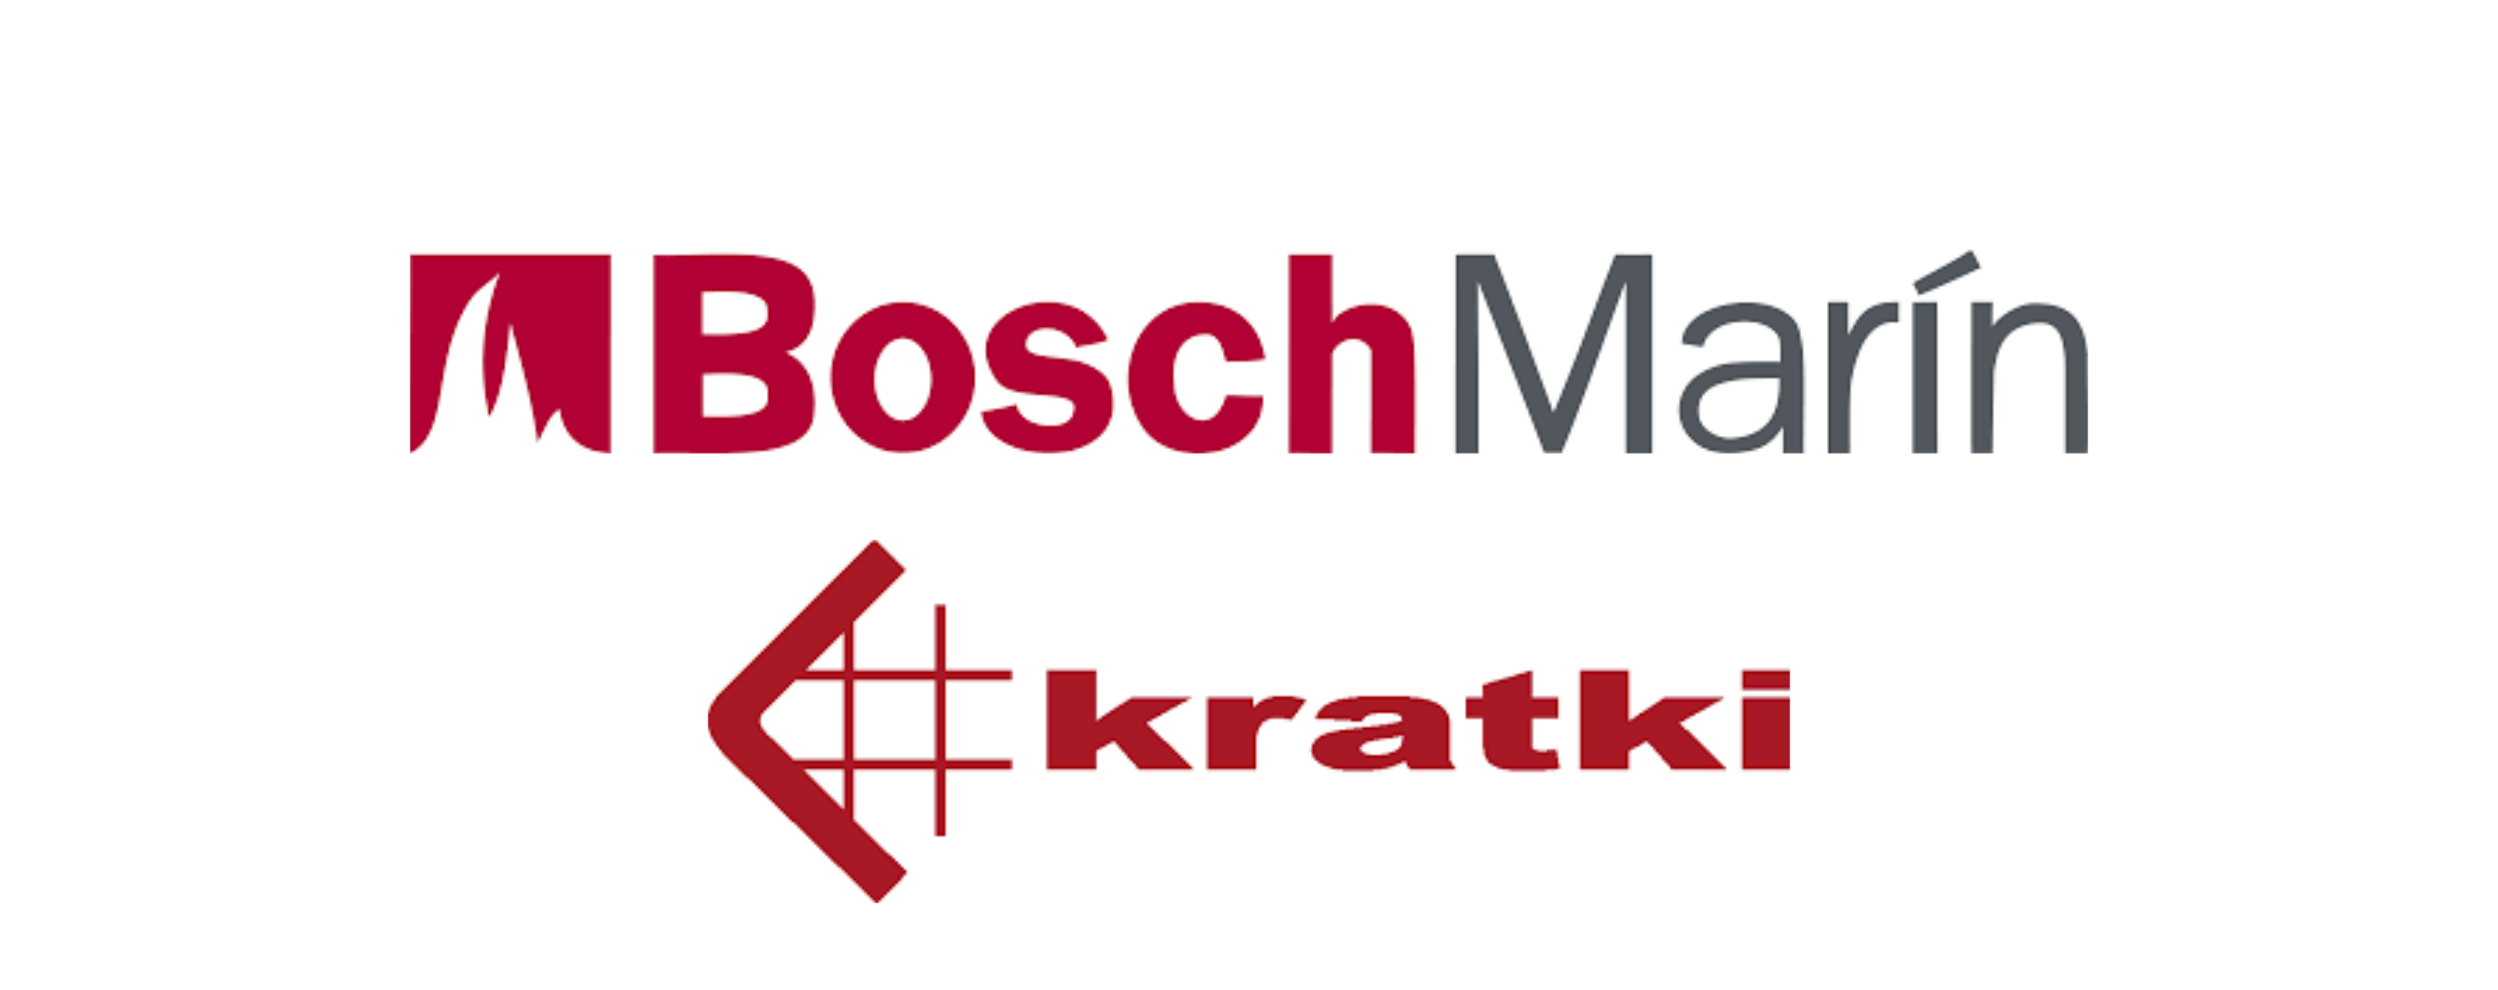 Bosch Marin presents Kratki